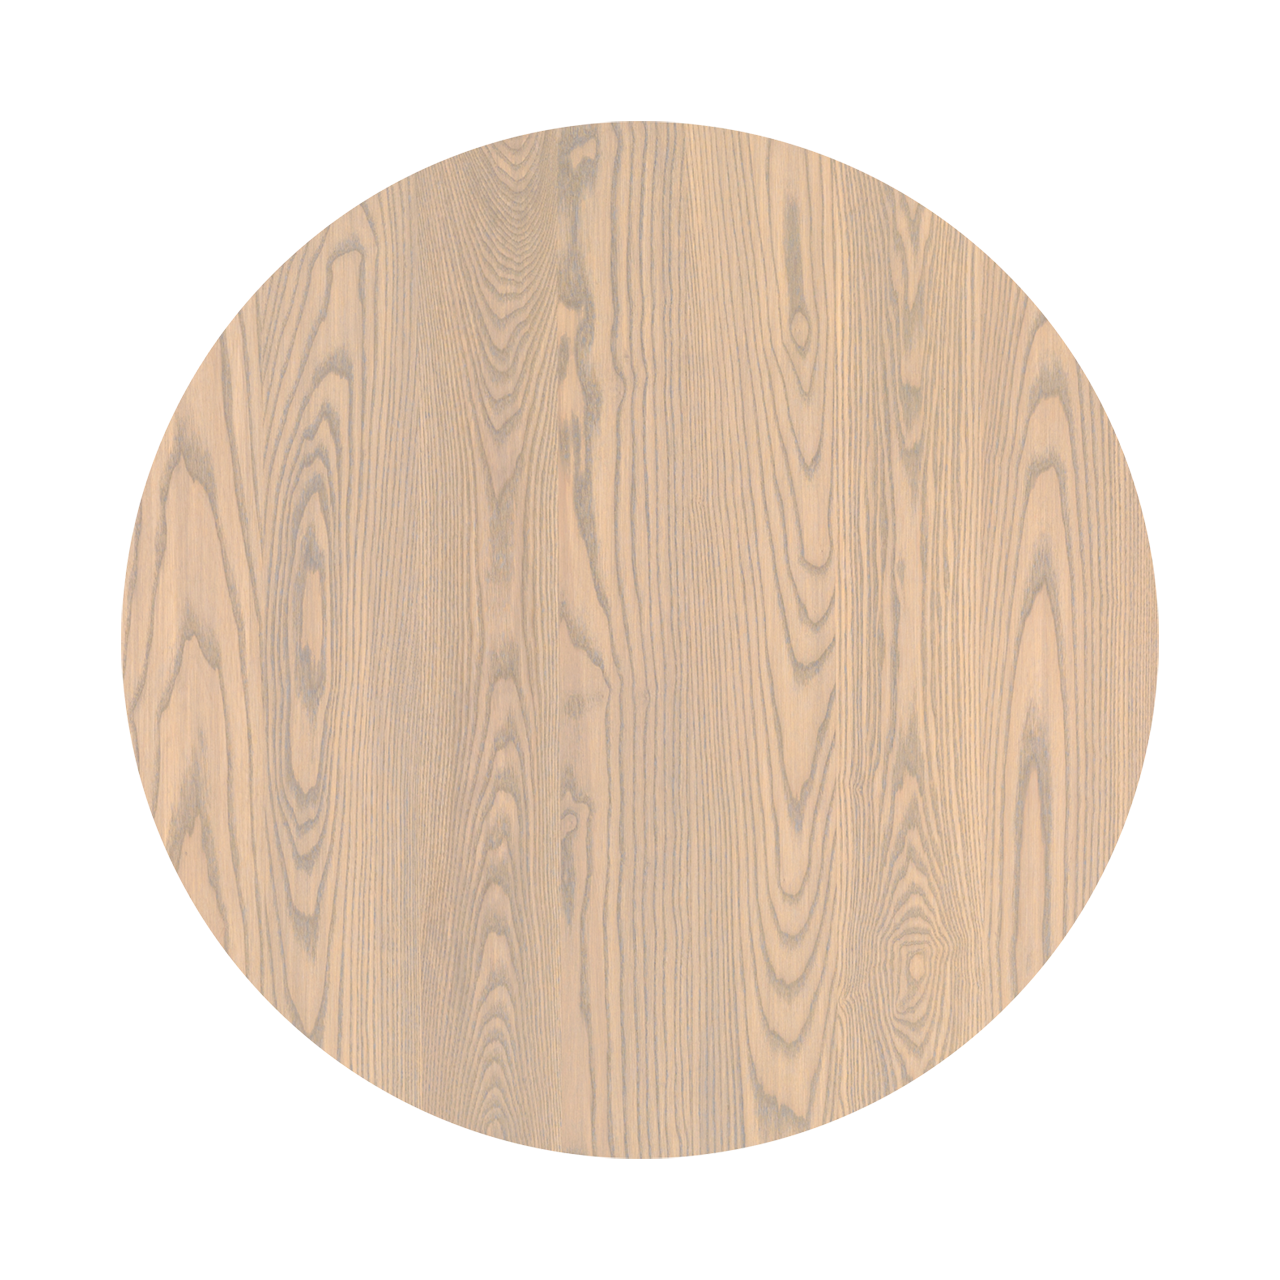 Ash Light Gray Wood Sample